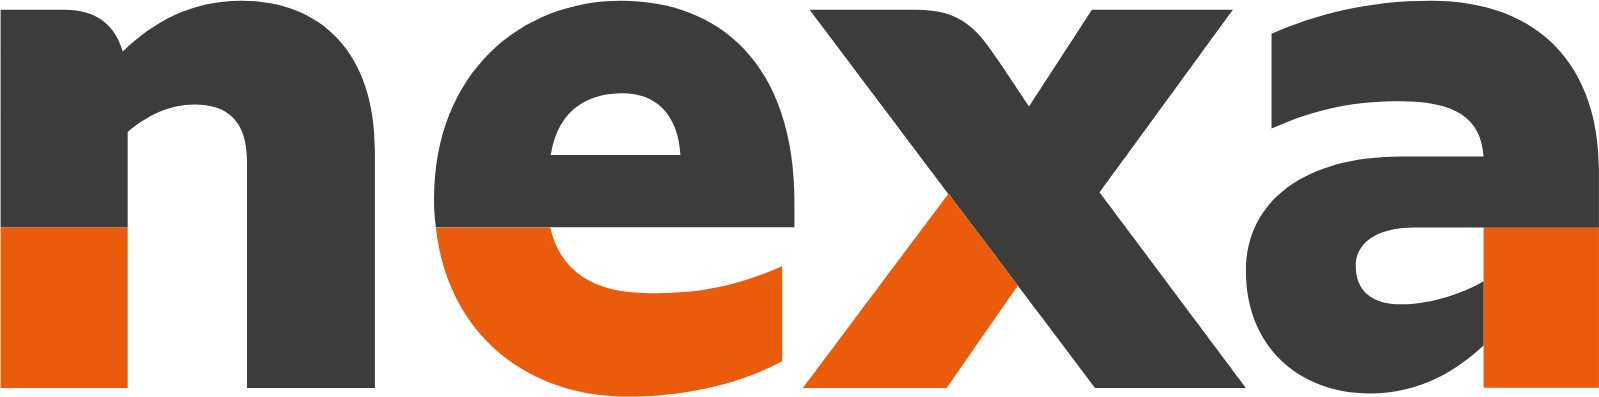 Nexa Resources logo large (transparent PNG)